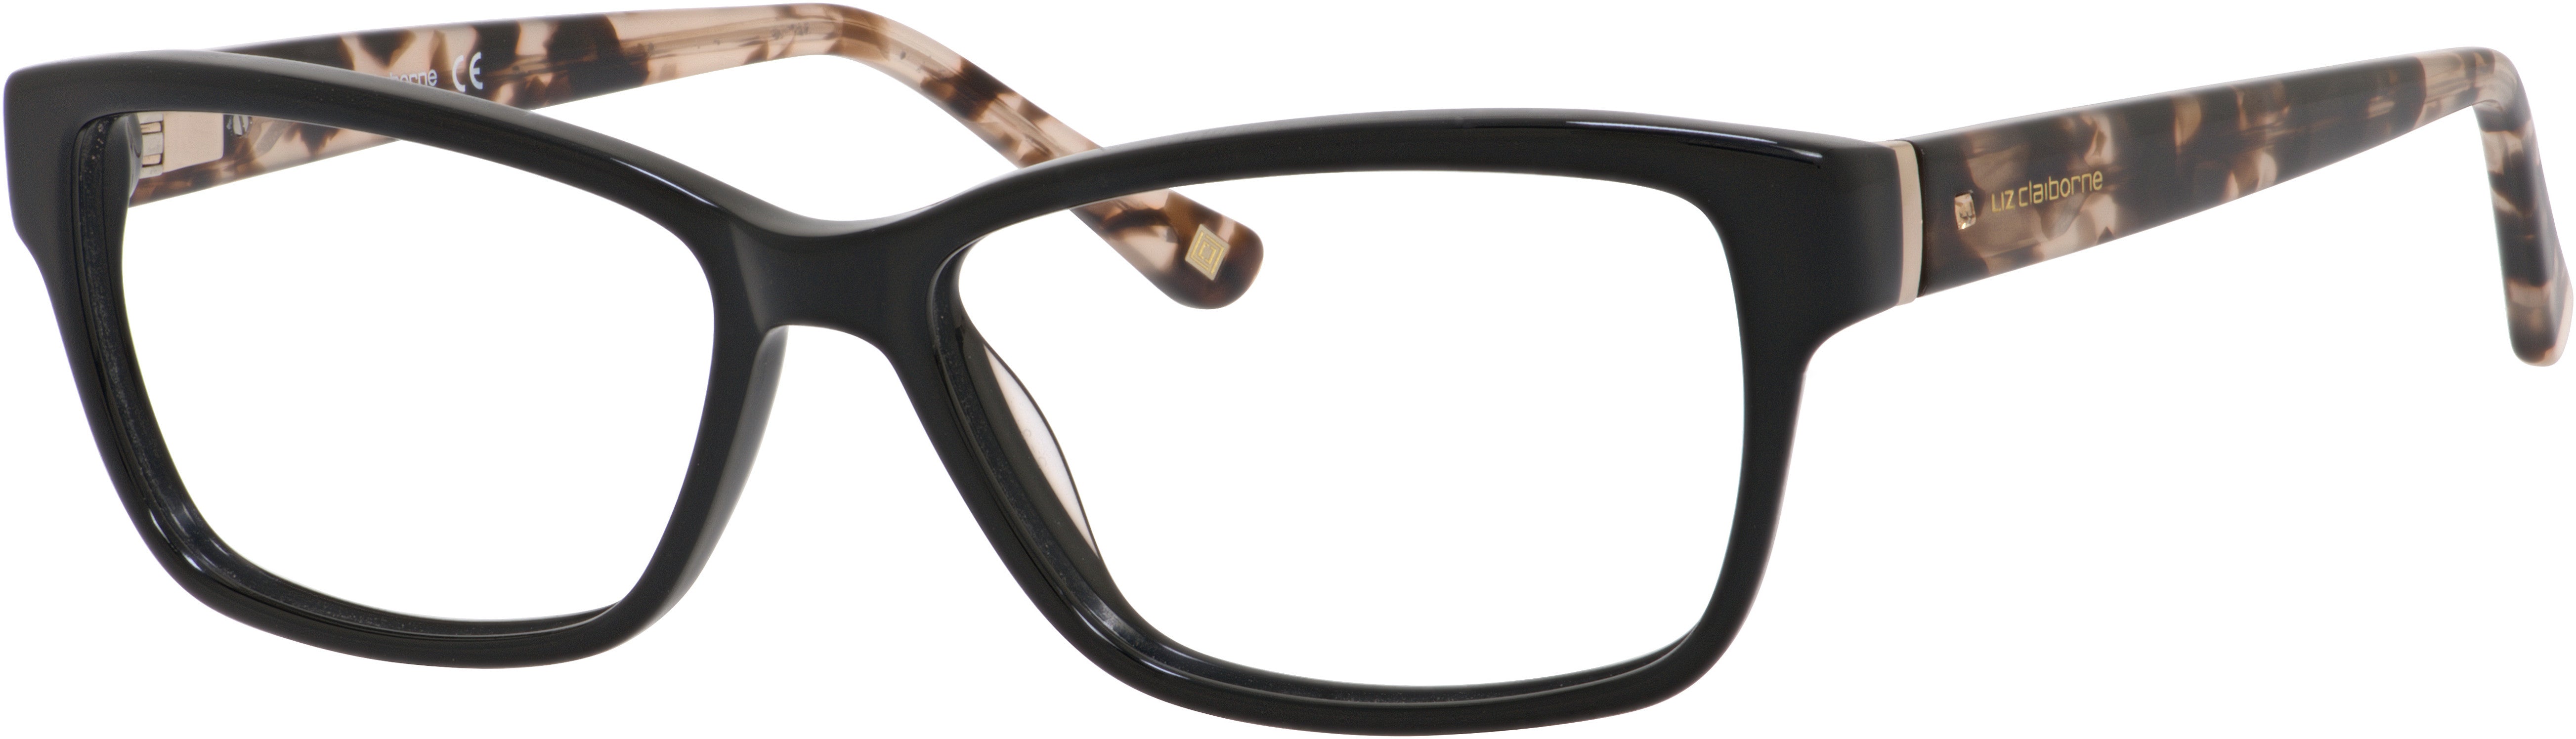  Liz Claiborne 616 Rectangular Eyeglasses 0807-0807  Black (00 Demo Lens)